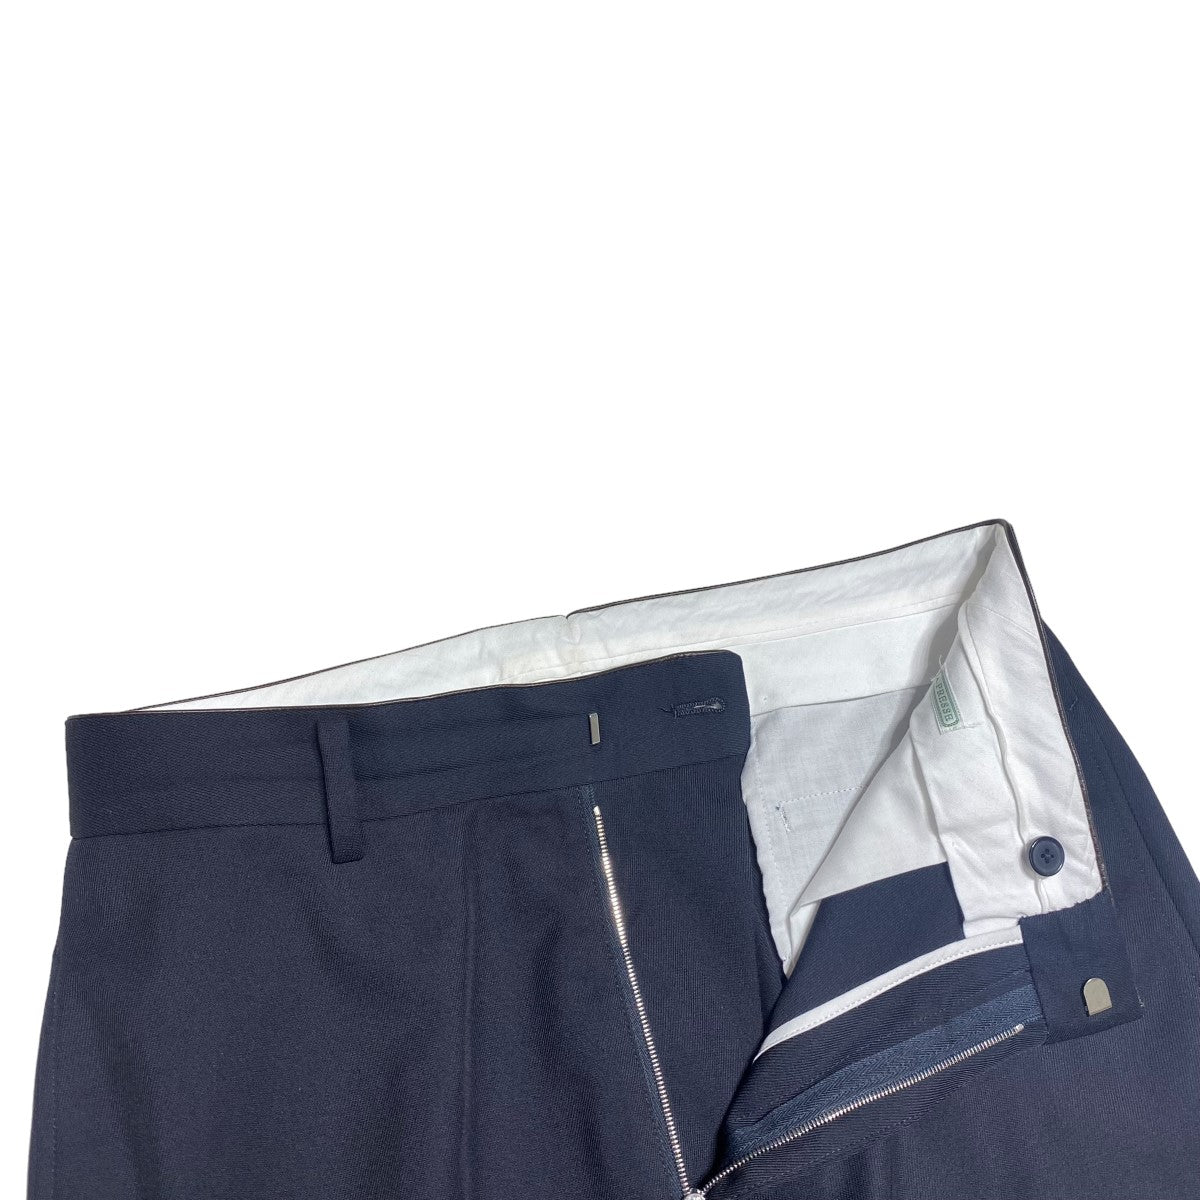 A．PRESSE(アプレッセ) Covert Cloth Trousersパンツ24SAP-04-18H 